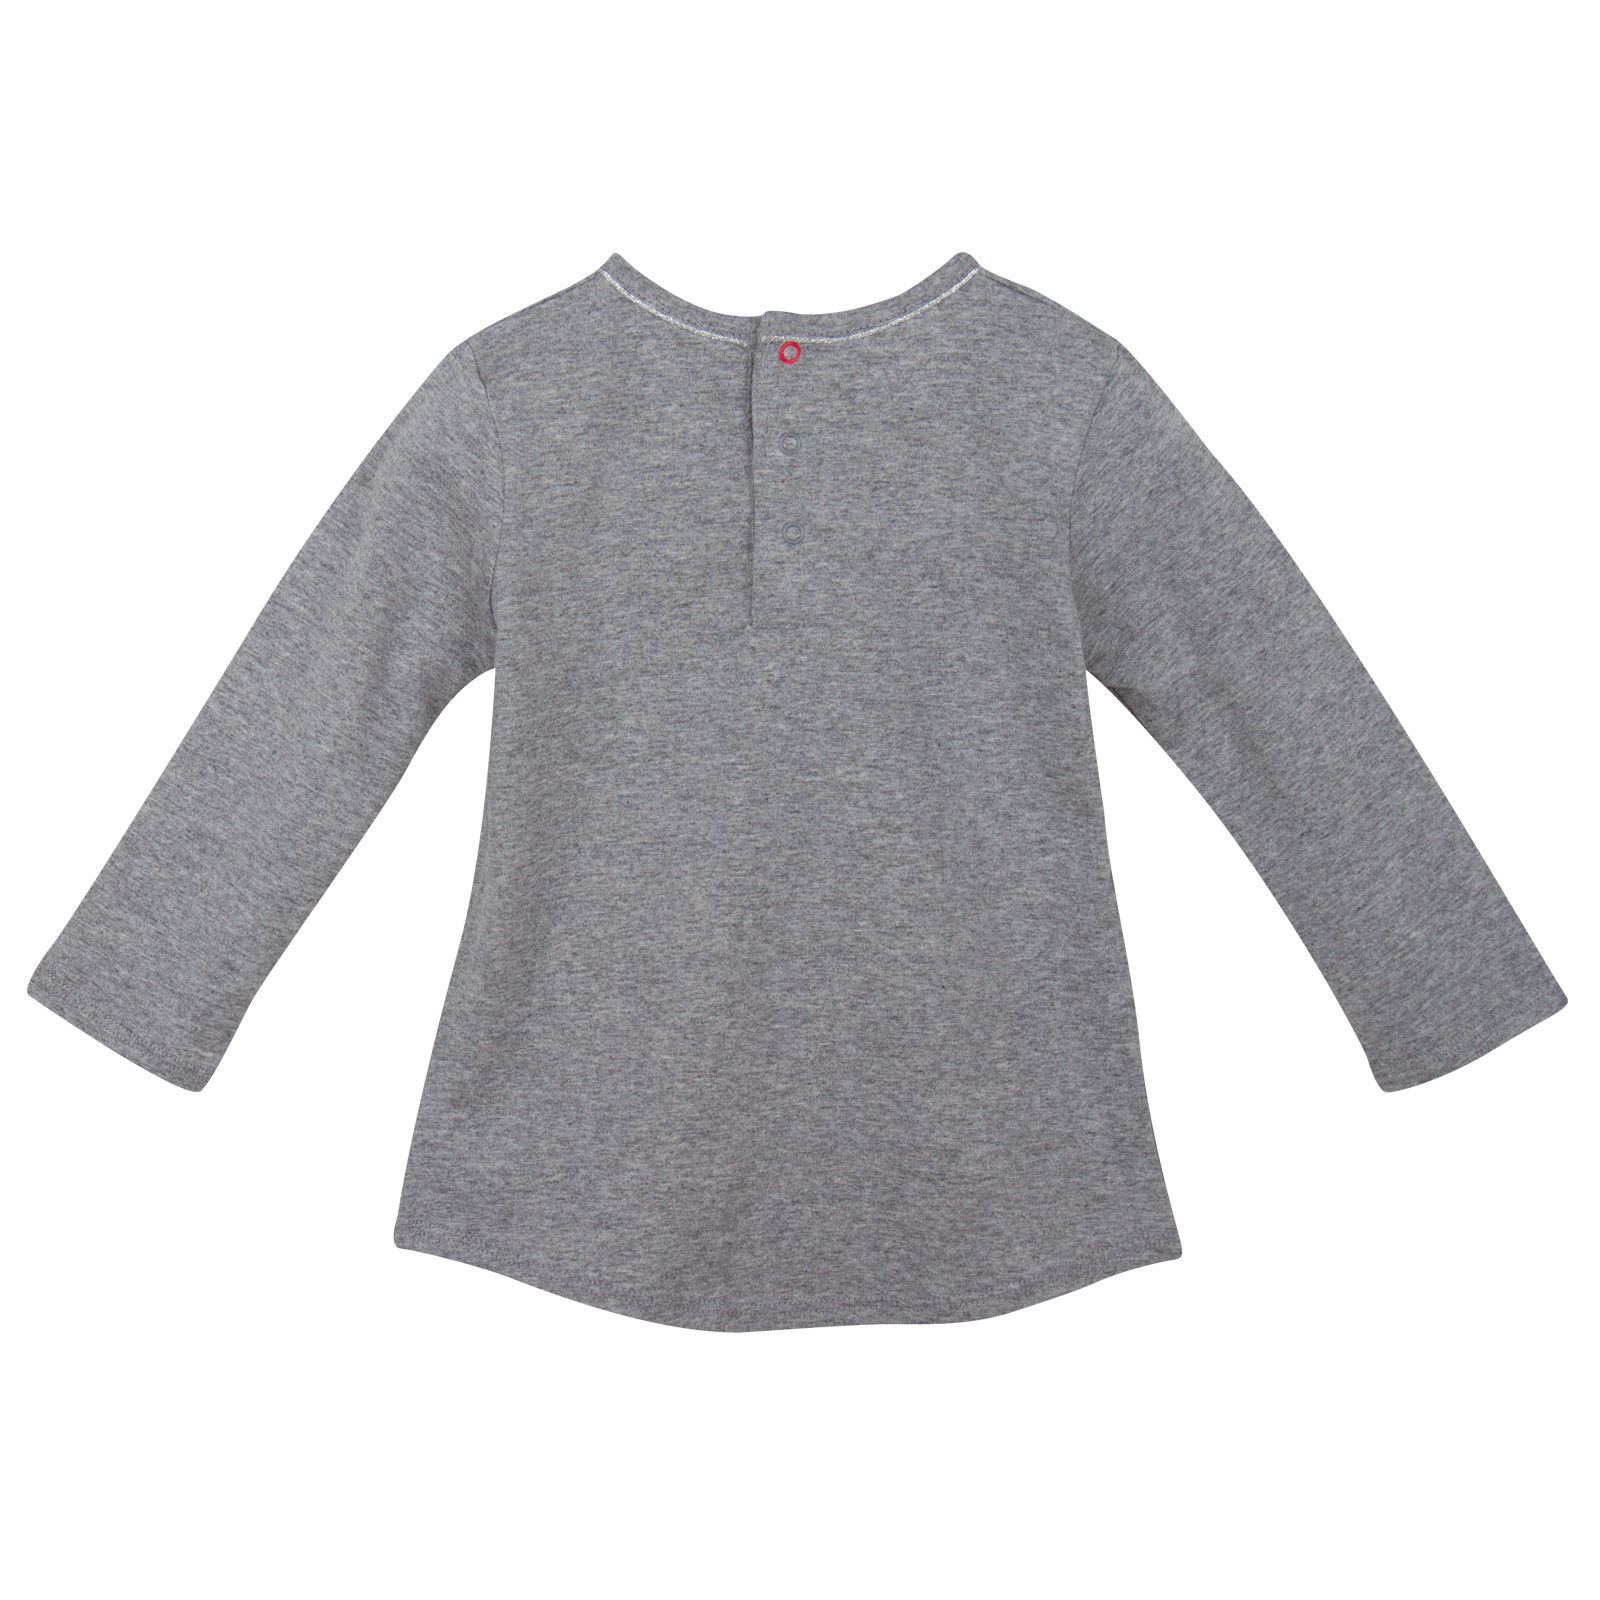 Baby Girls Grey 'Cloud&Rain' Printed T-Shirt - CÉMAROSE | Children's Fashion Store - 2